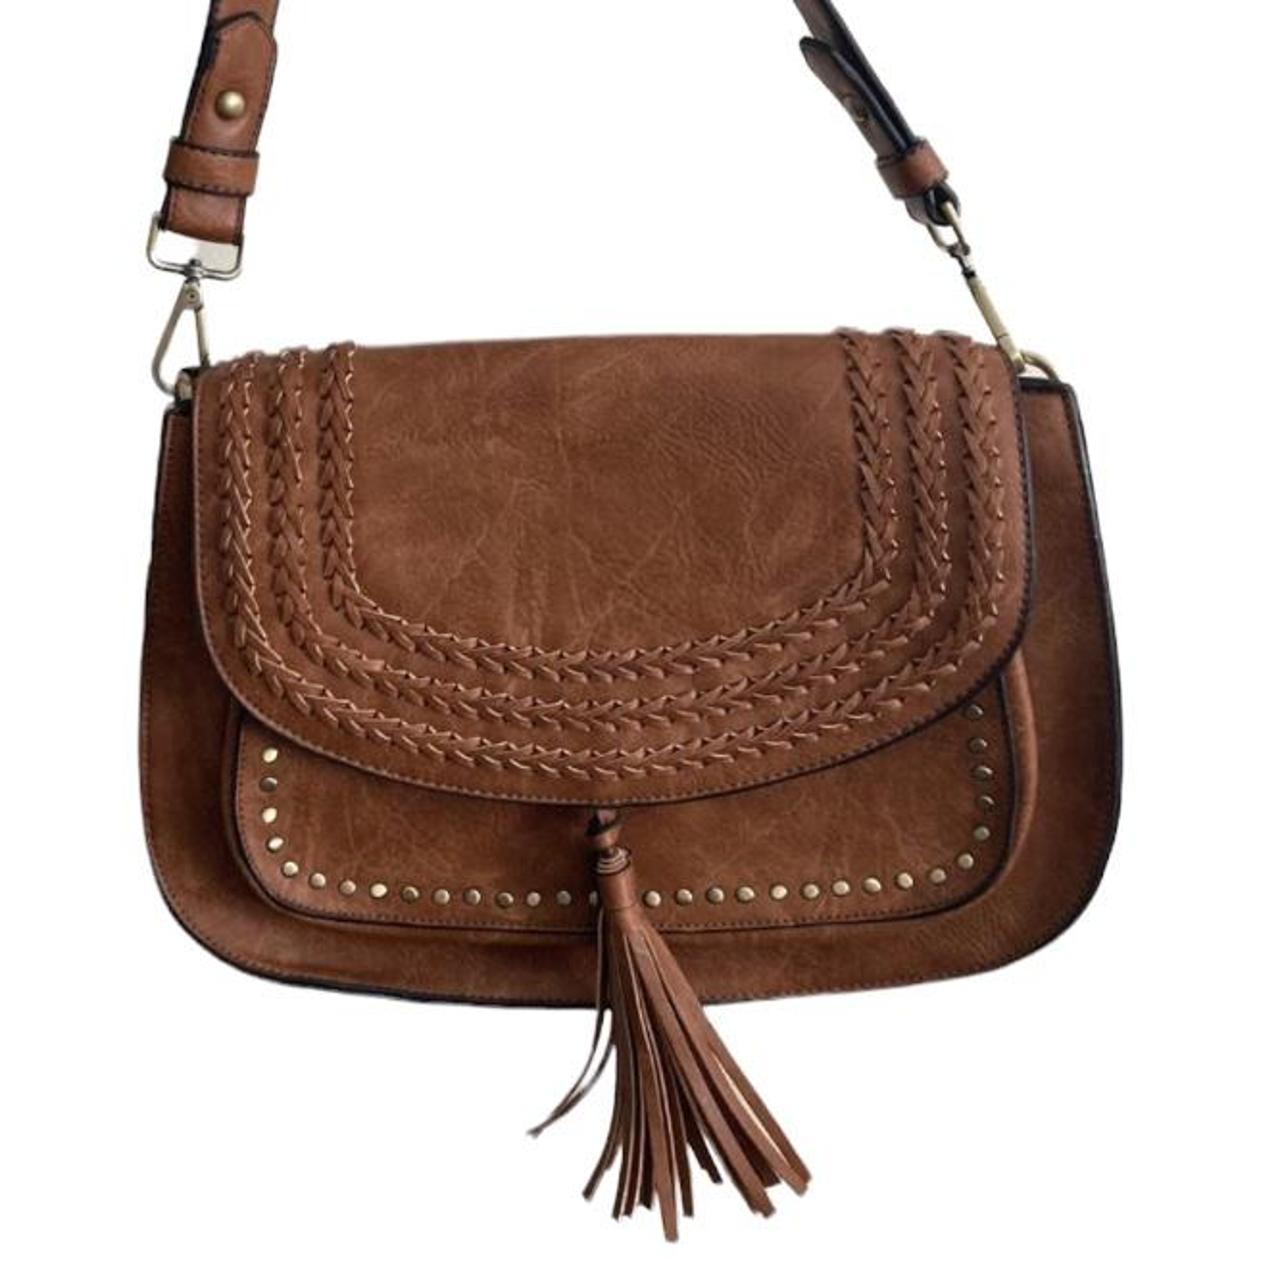 Buy MKF Shoulder Handbag for Women: Vegan Leather Satchel-Tote Bag,  Top-Handle Purse, Ladies Pocketbook Beige at Amazon.in